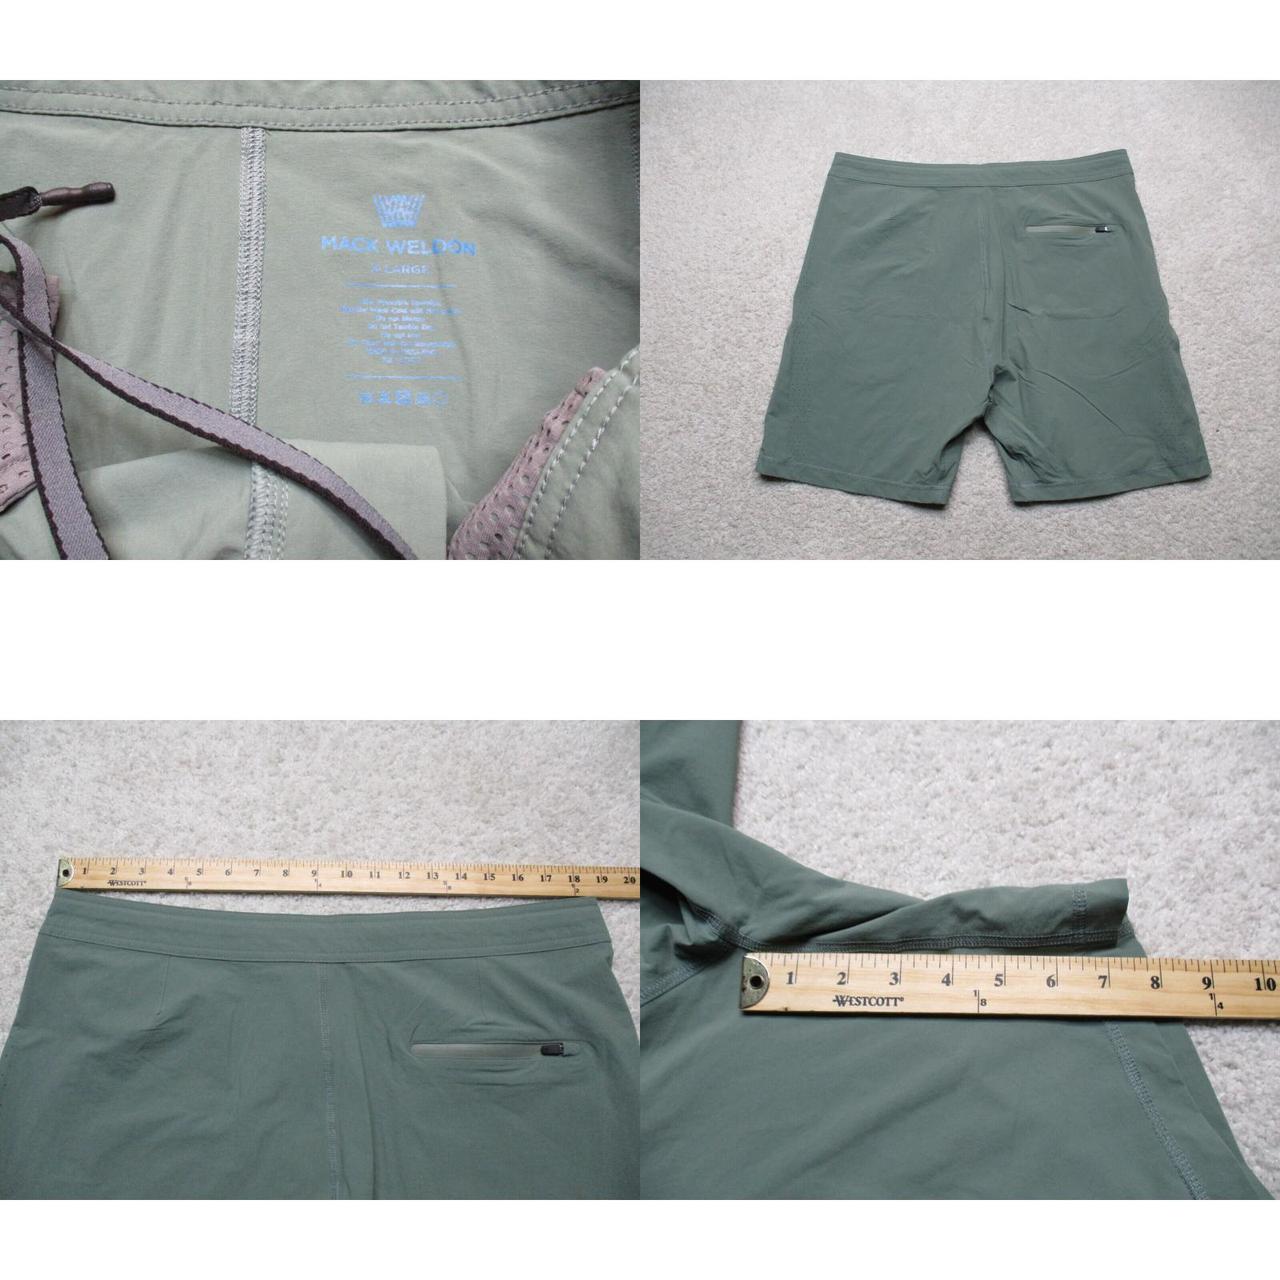 Mack Weldon Men's Green Shorts (4)